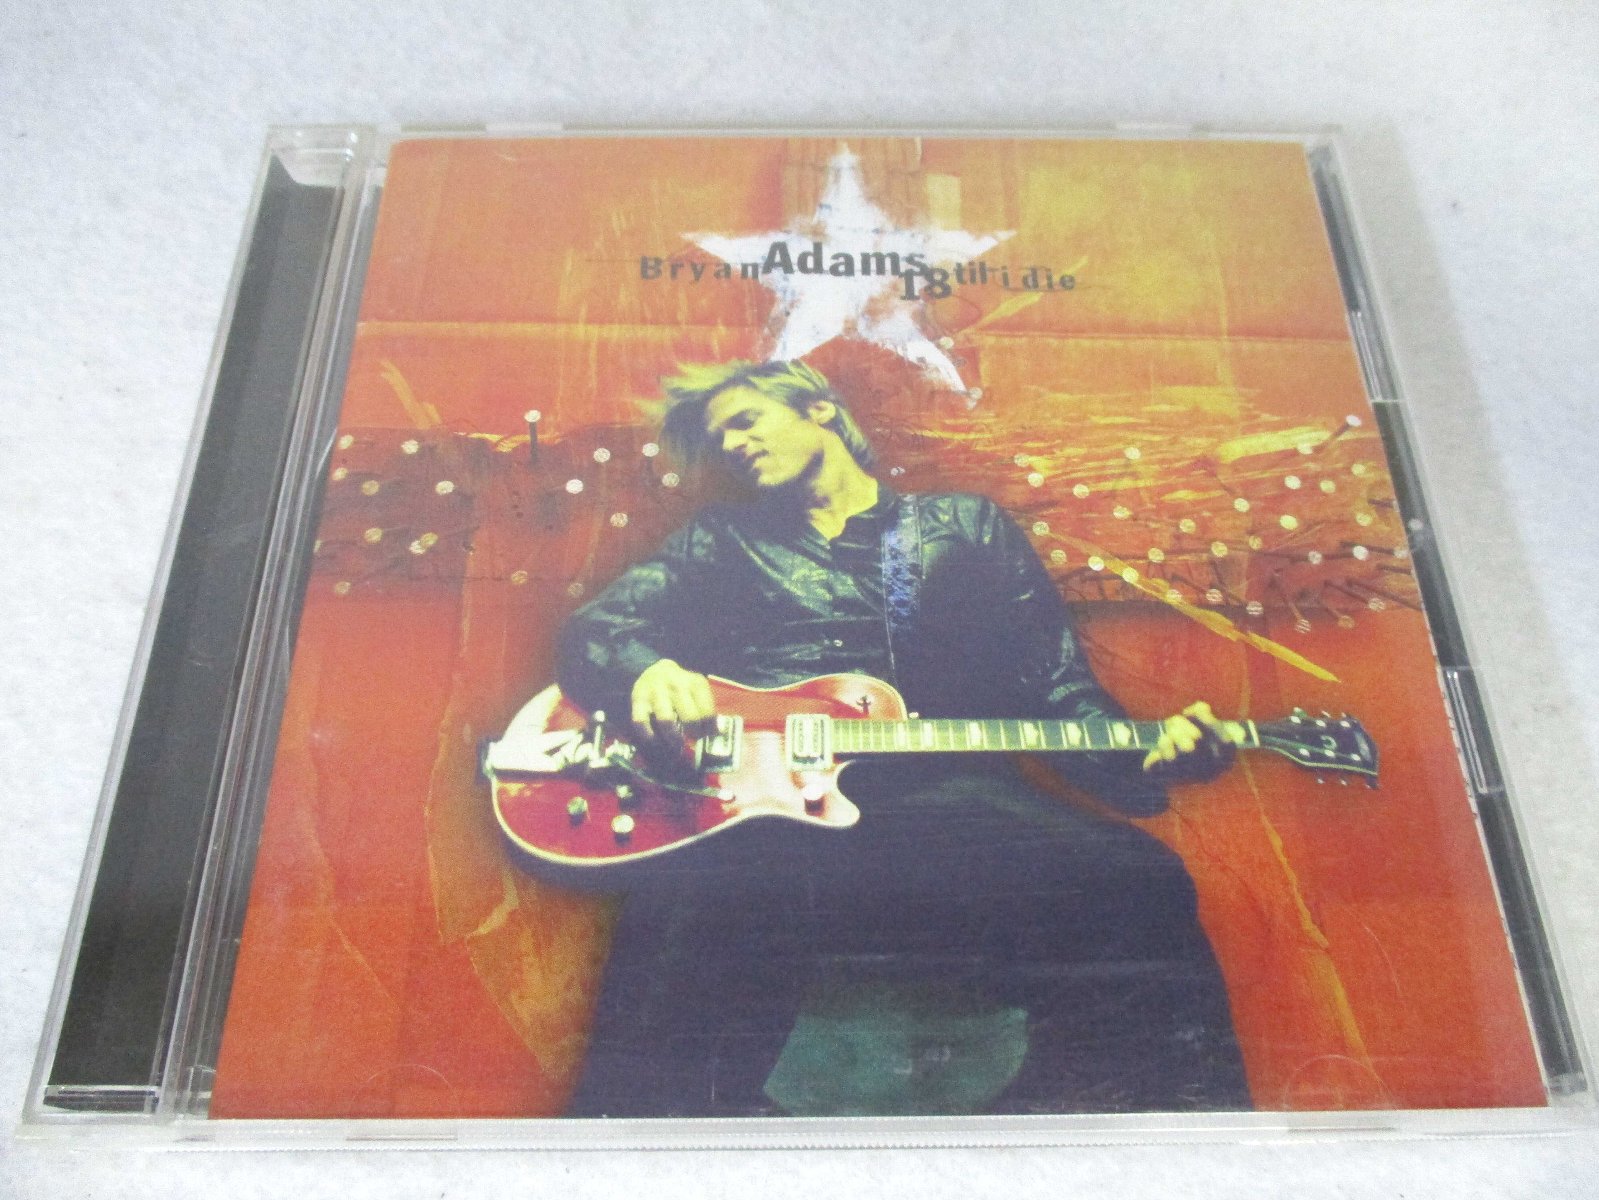 AC00253 【中古】 【CD】 18 TIL I DIE/ブライアン・アダムス